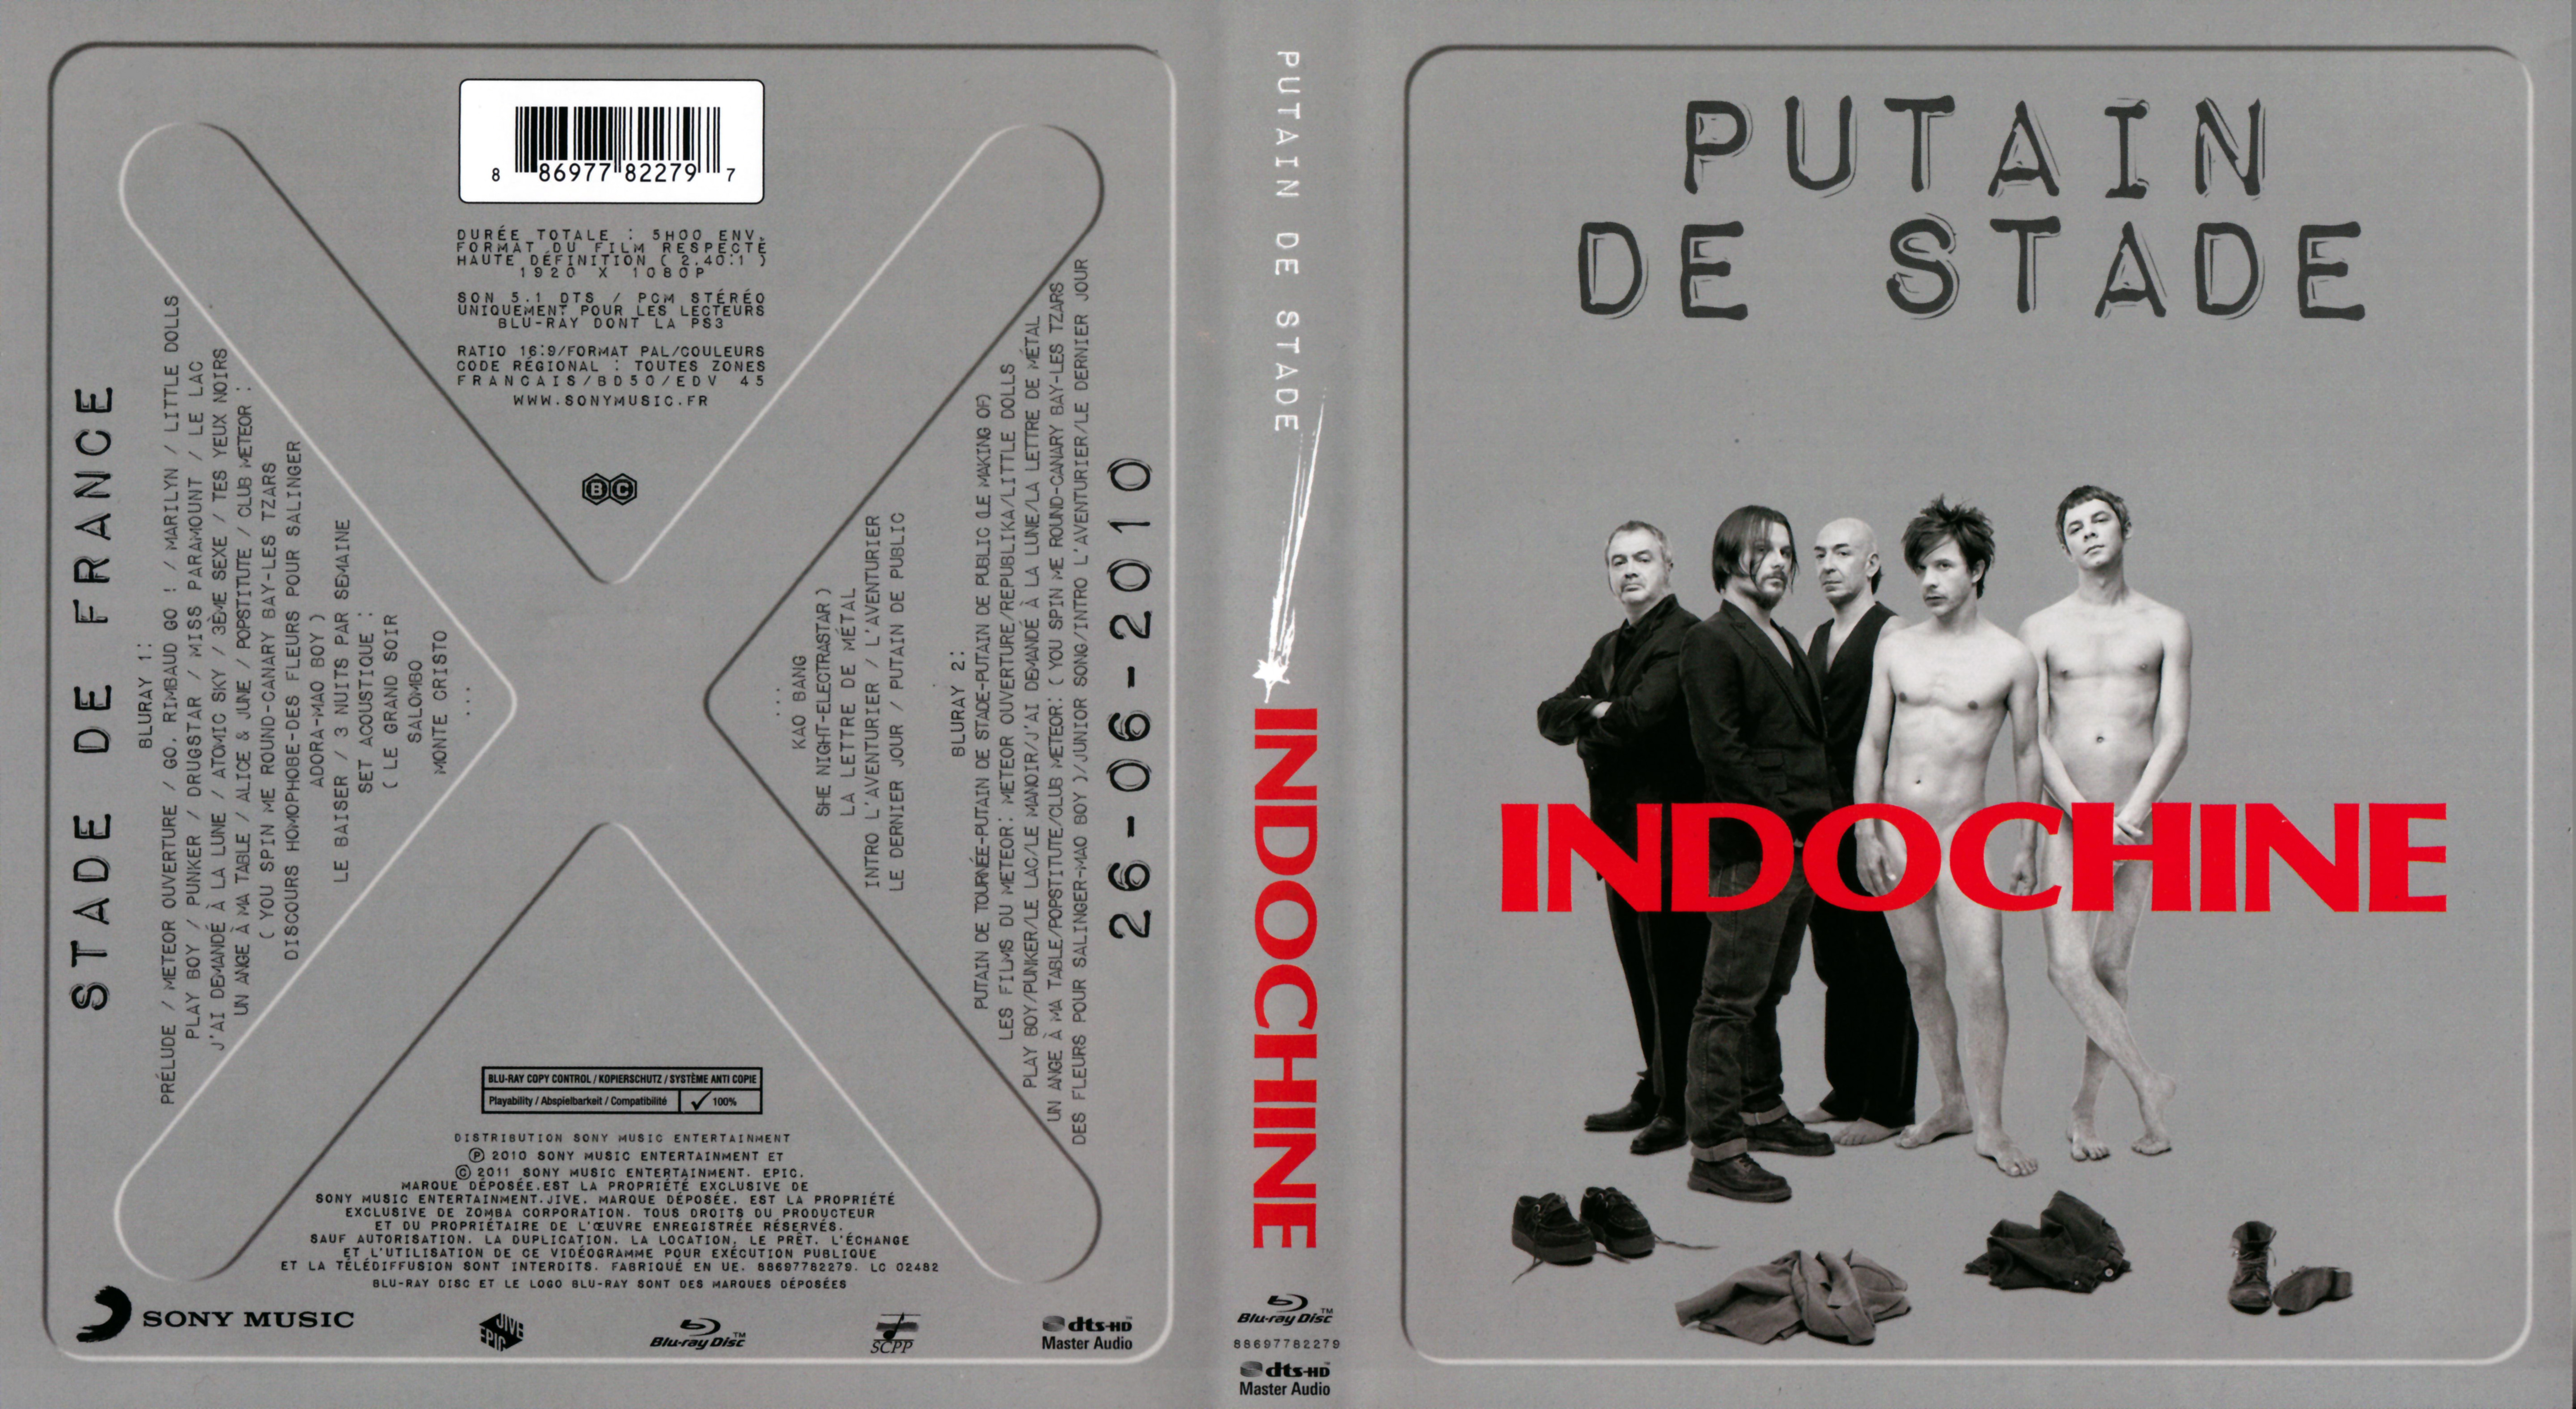 Jaquette DVD Indochine - Putain de stade (BLU-RAY)